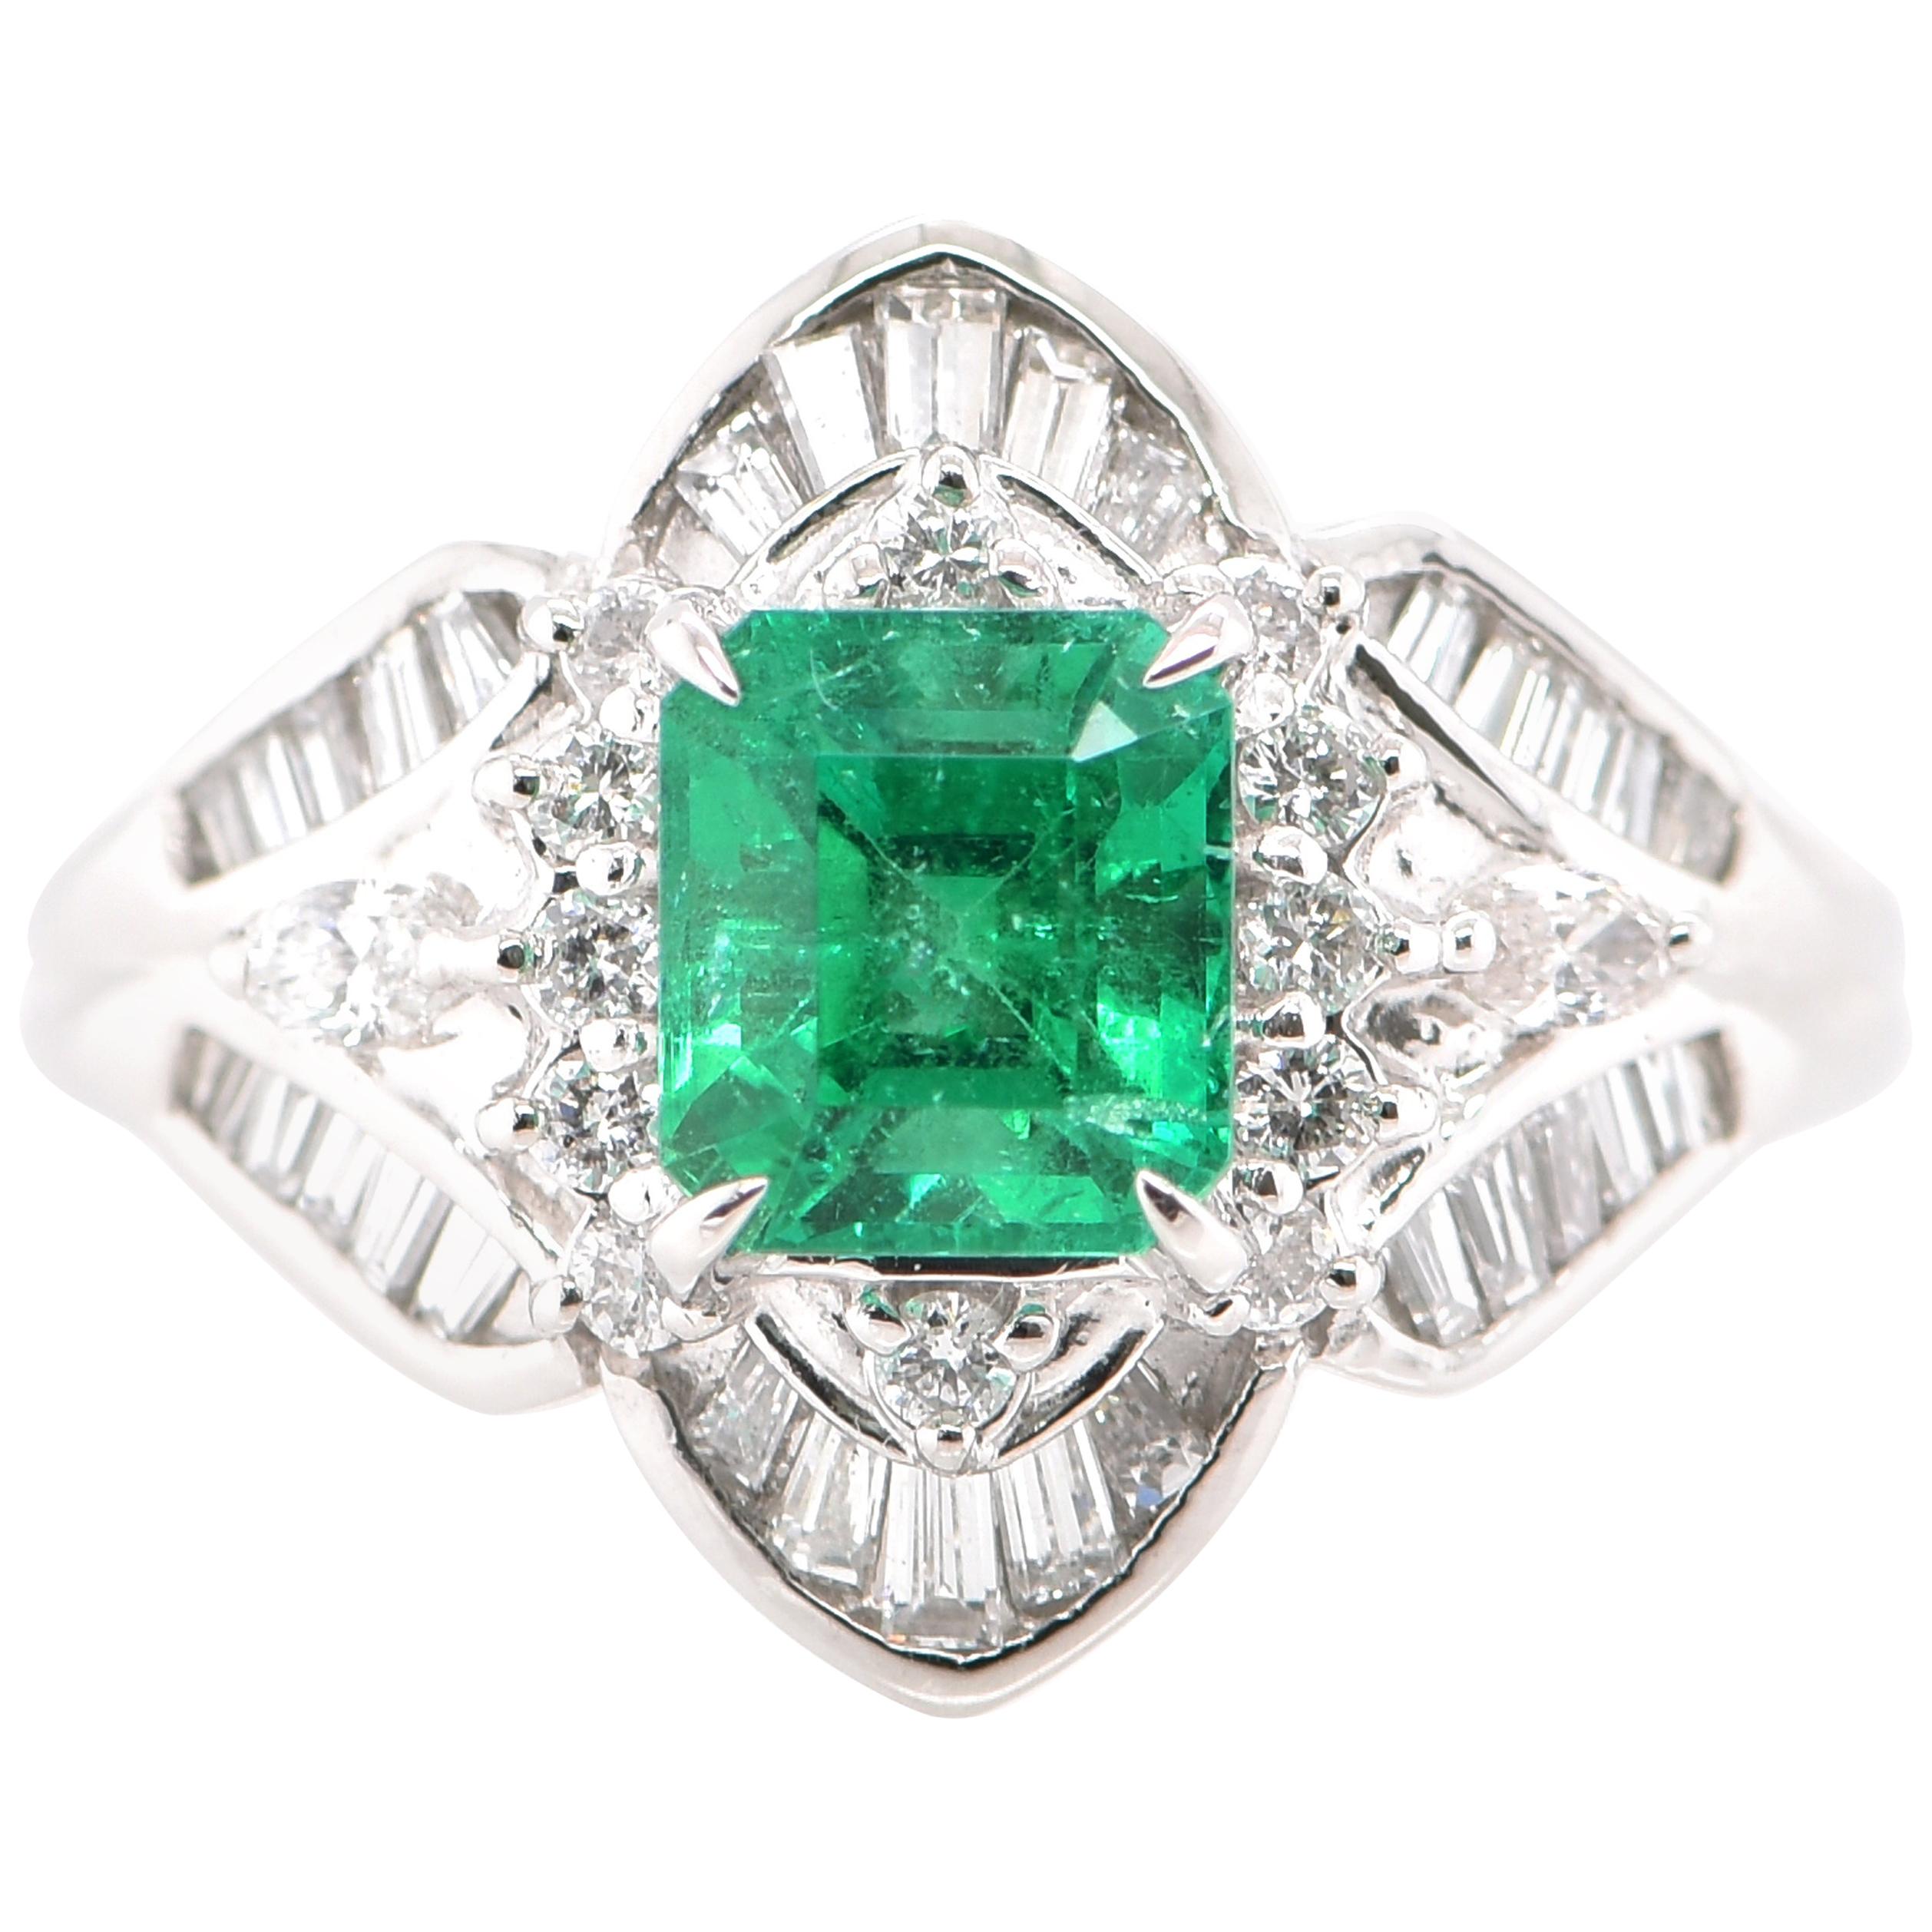 Art Deco Style 1.44 Carat Emerald and Diamond Cocktail Ring Set in Platinum